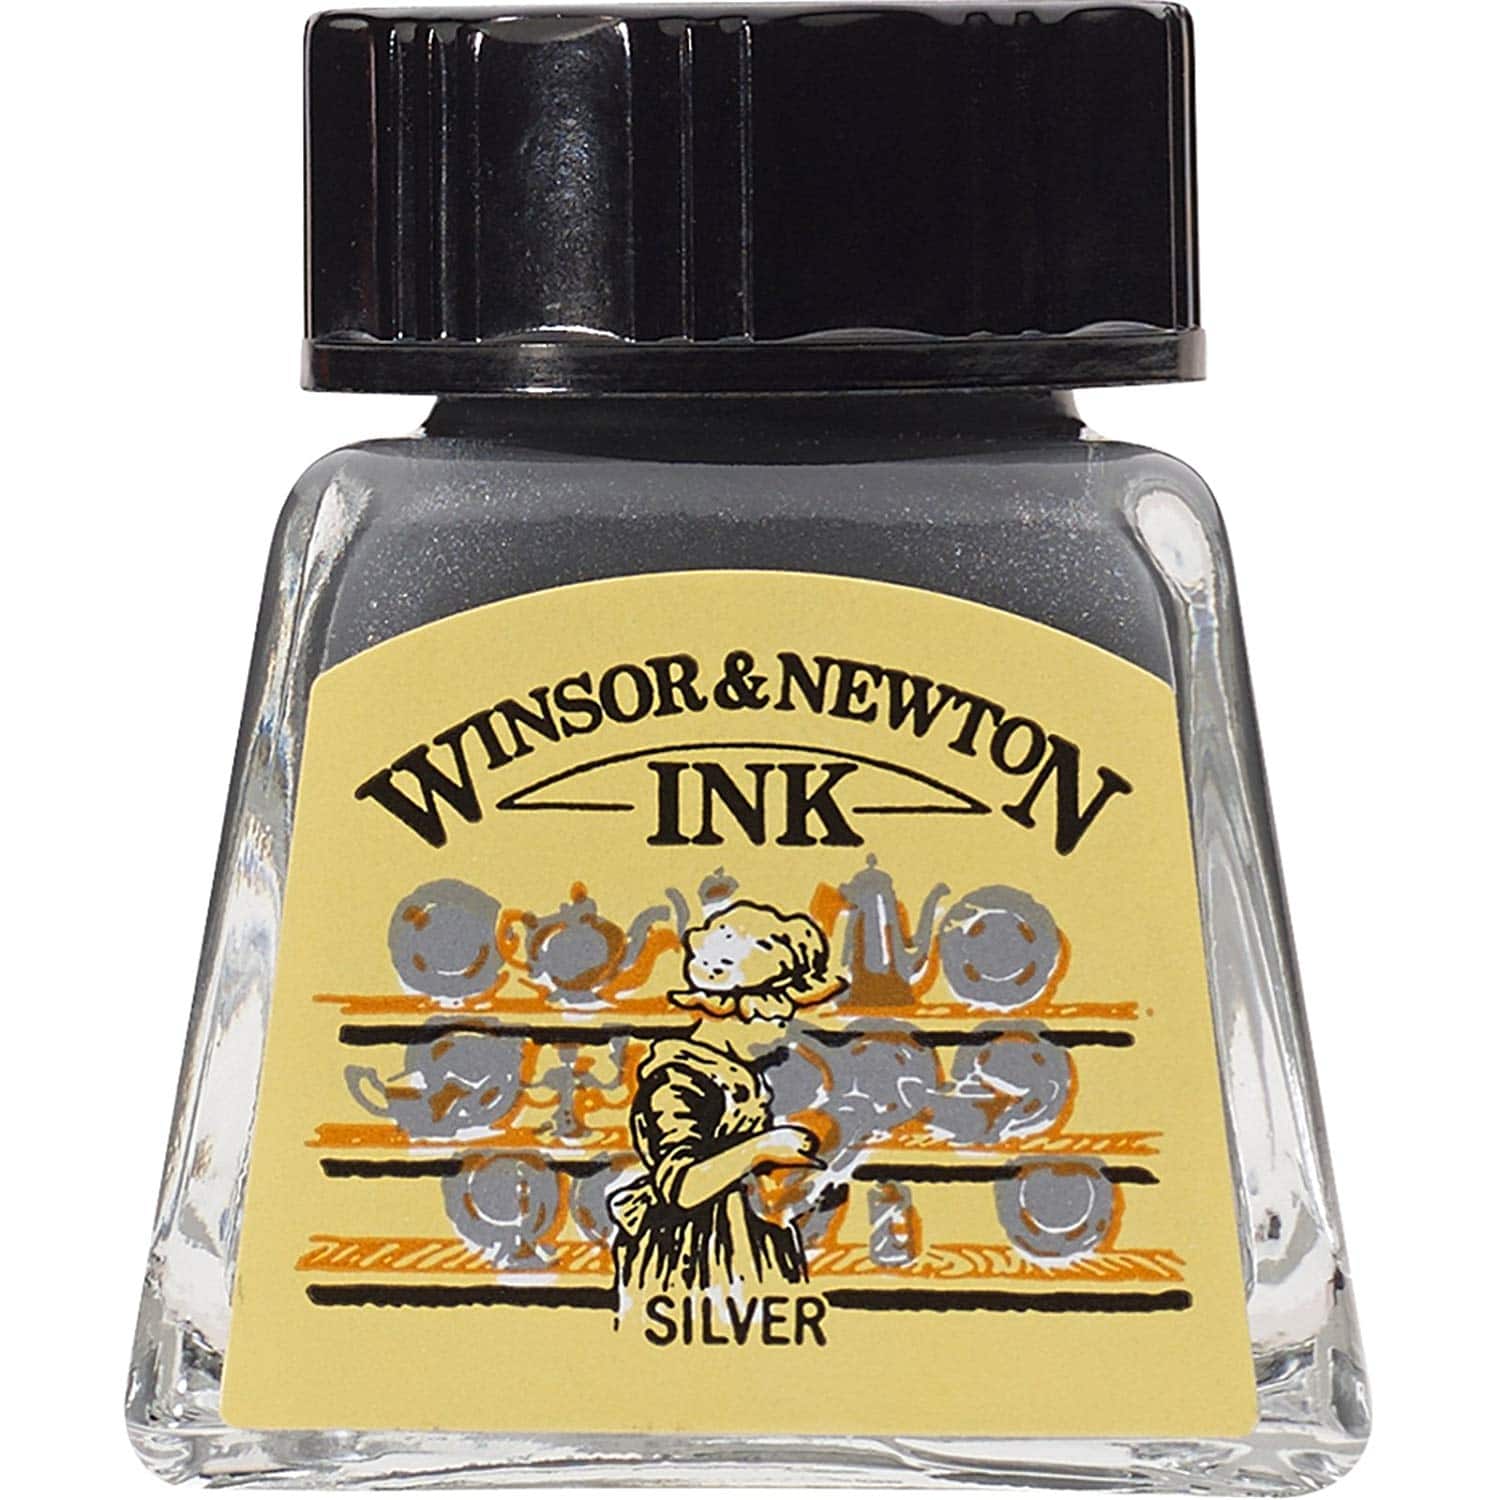 Winsor & Newton Ink 30ml Jar - Gold Ink